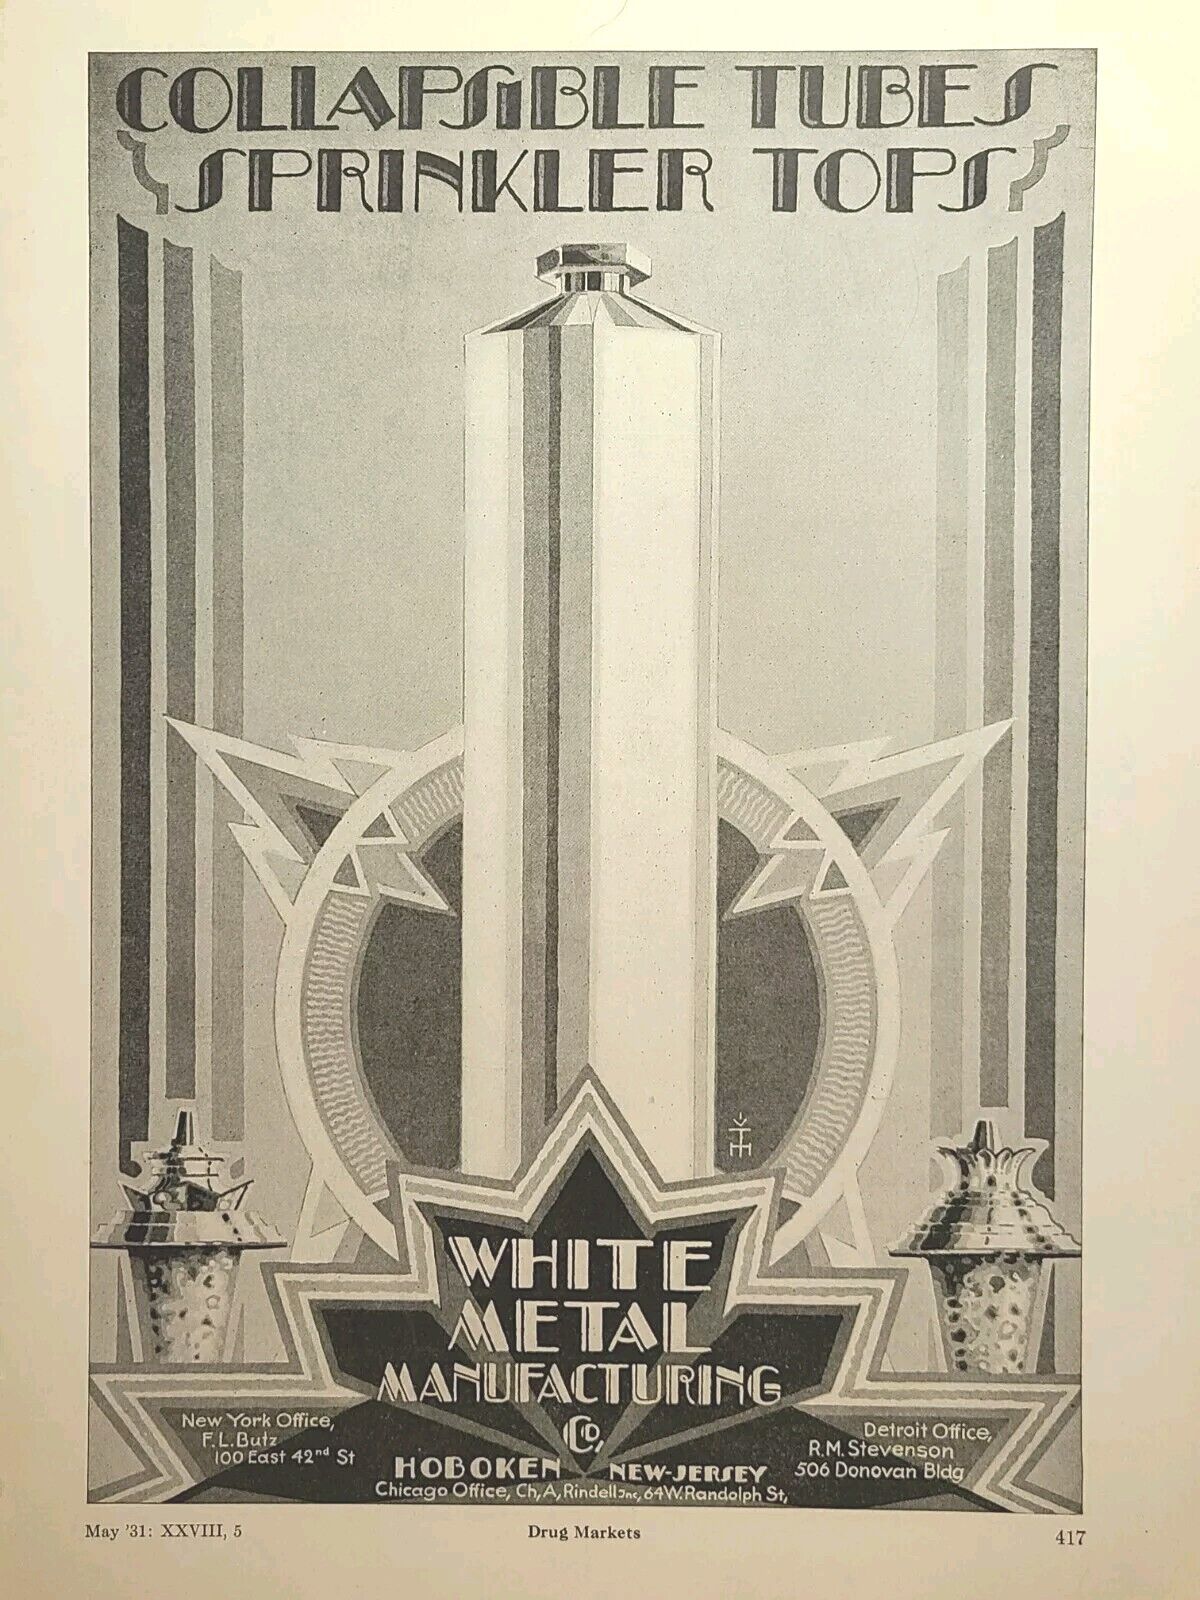 White Metal Manufacturing Co Hoboken NJ Collapsible Tubes Vintage Print Ad 1931